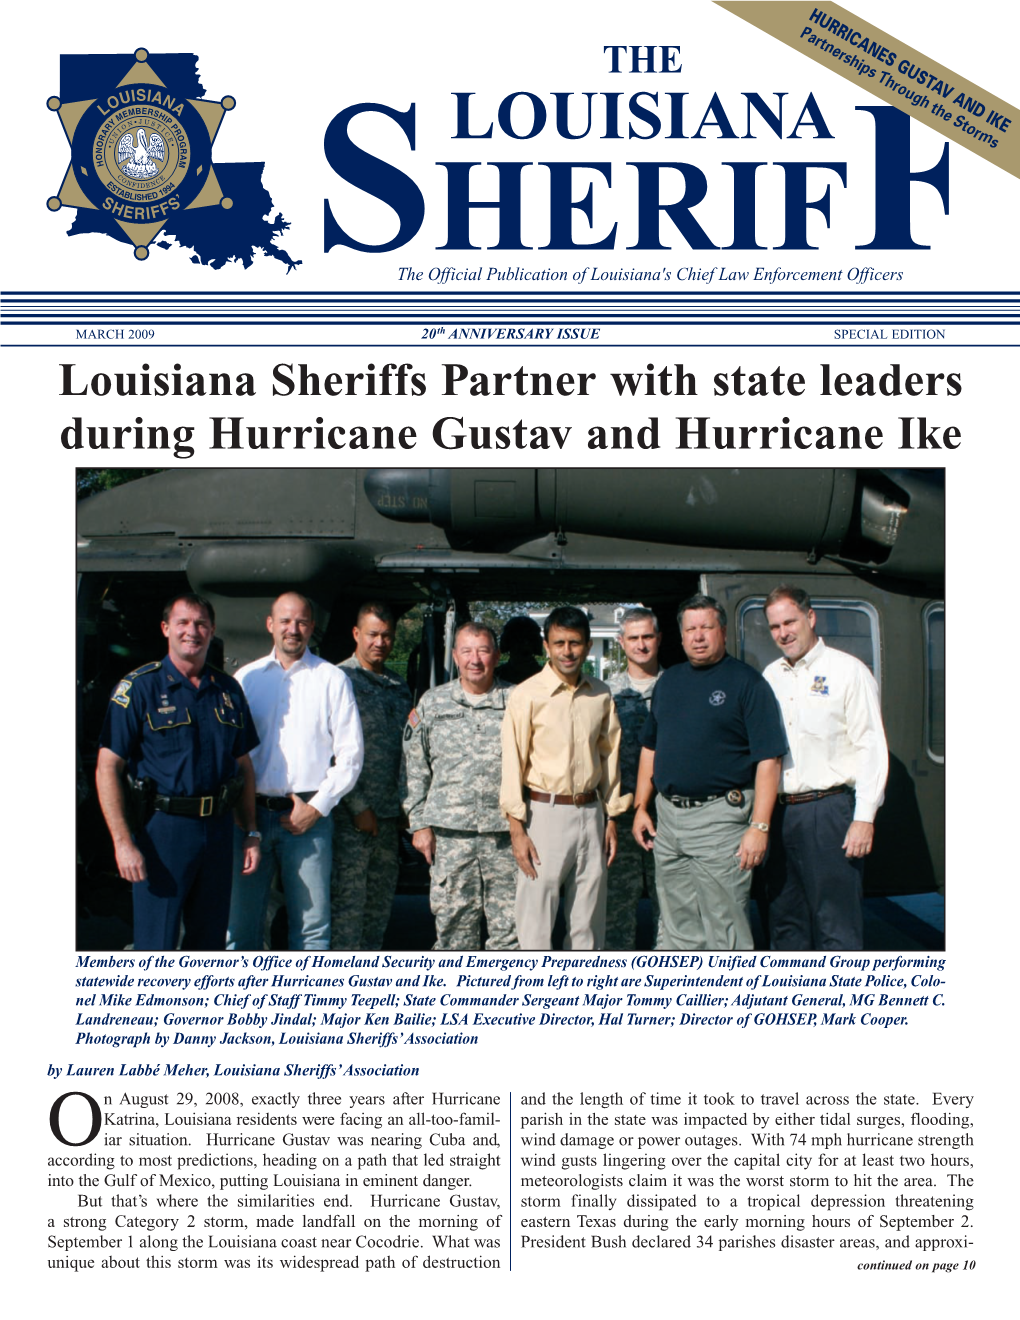 Louisiana Sheriffs Partner with State Leaders During Hurricane Gustav and Hurricane Ike